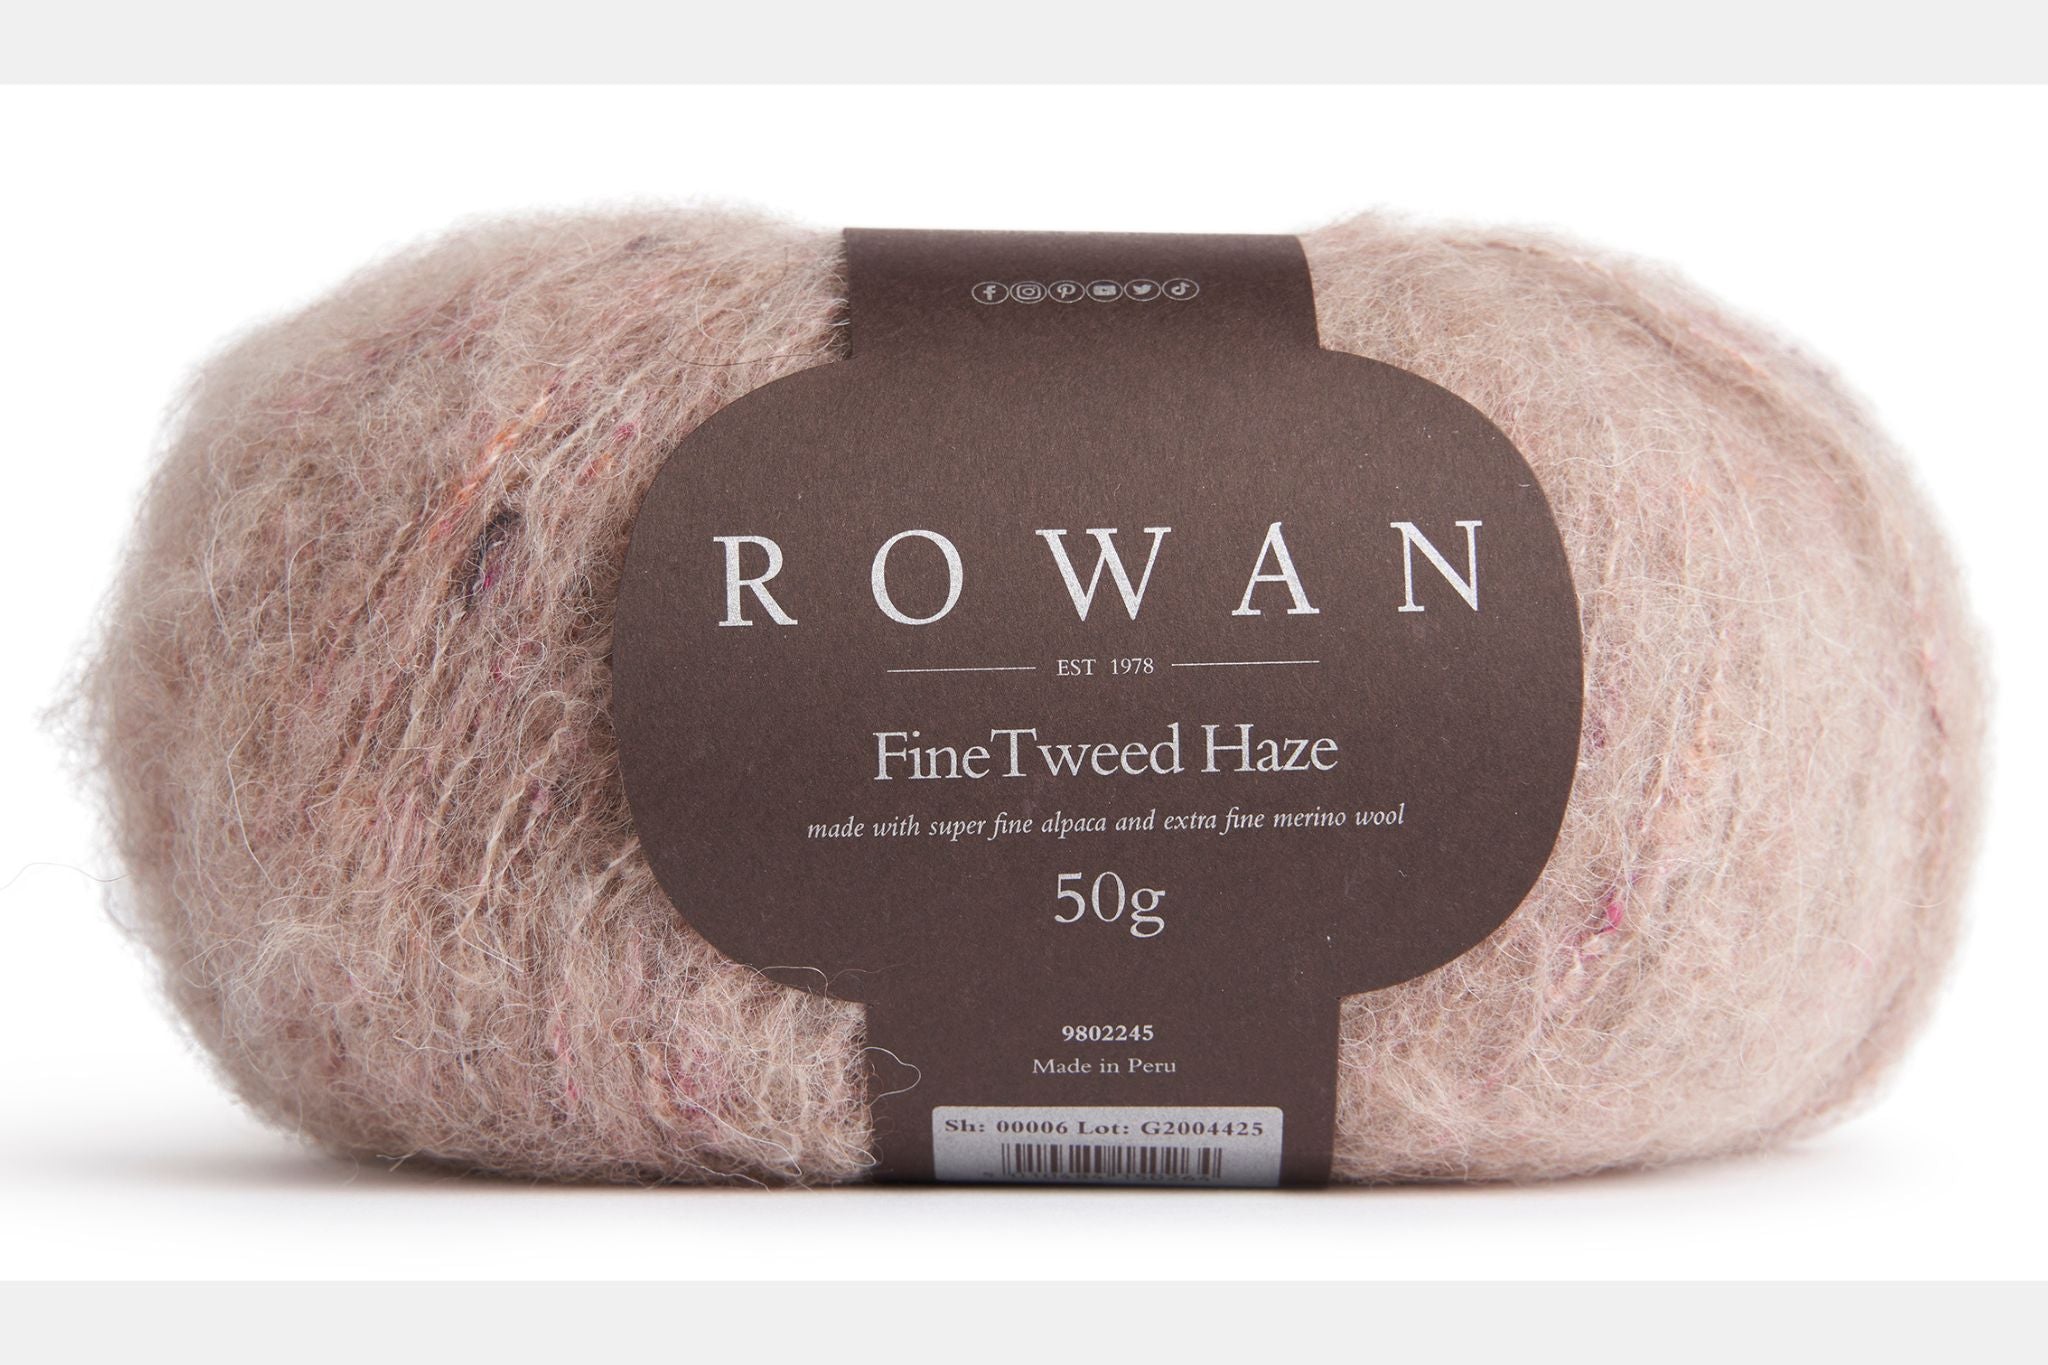 Rowan Fine Tweed Haze in Linen